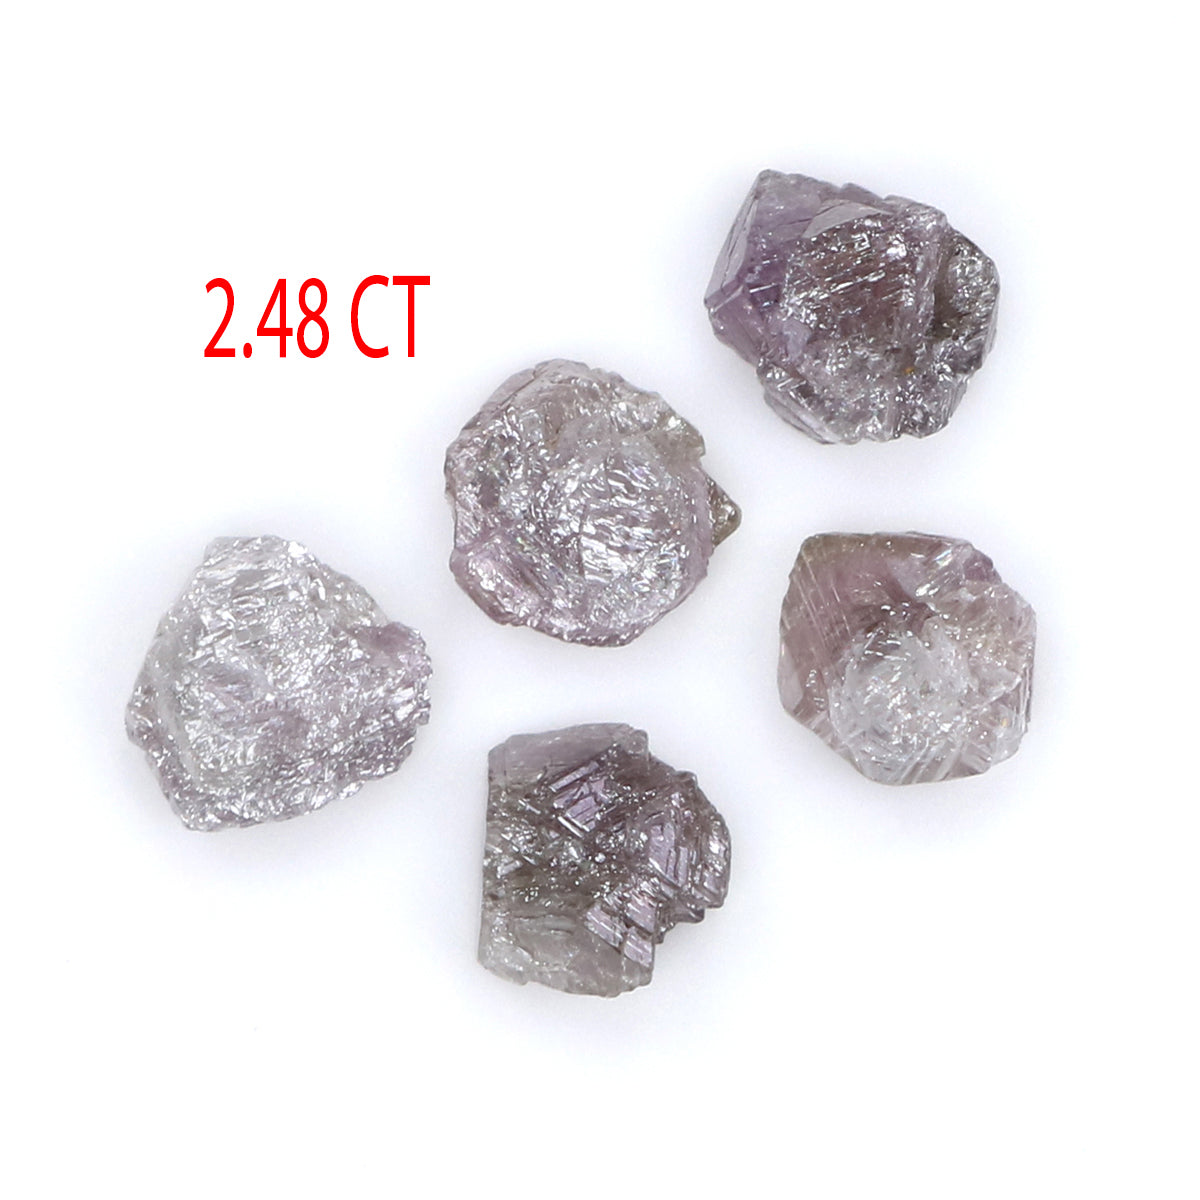 2.48 CT Natural Loose Rough Shape Diamond Pink Color Rough Cut Diamond 4.55 MM Natural Loose Diamond Rough Irregular Cut Diamond KDL9665